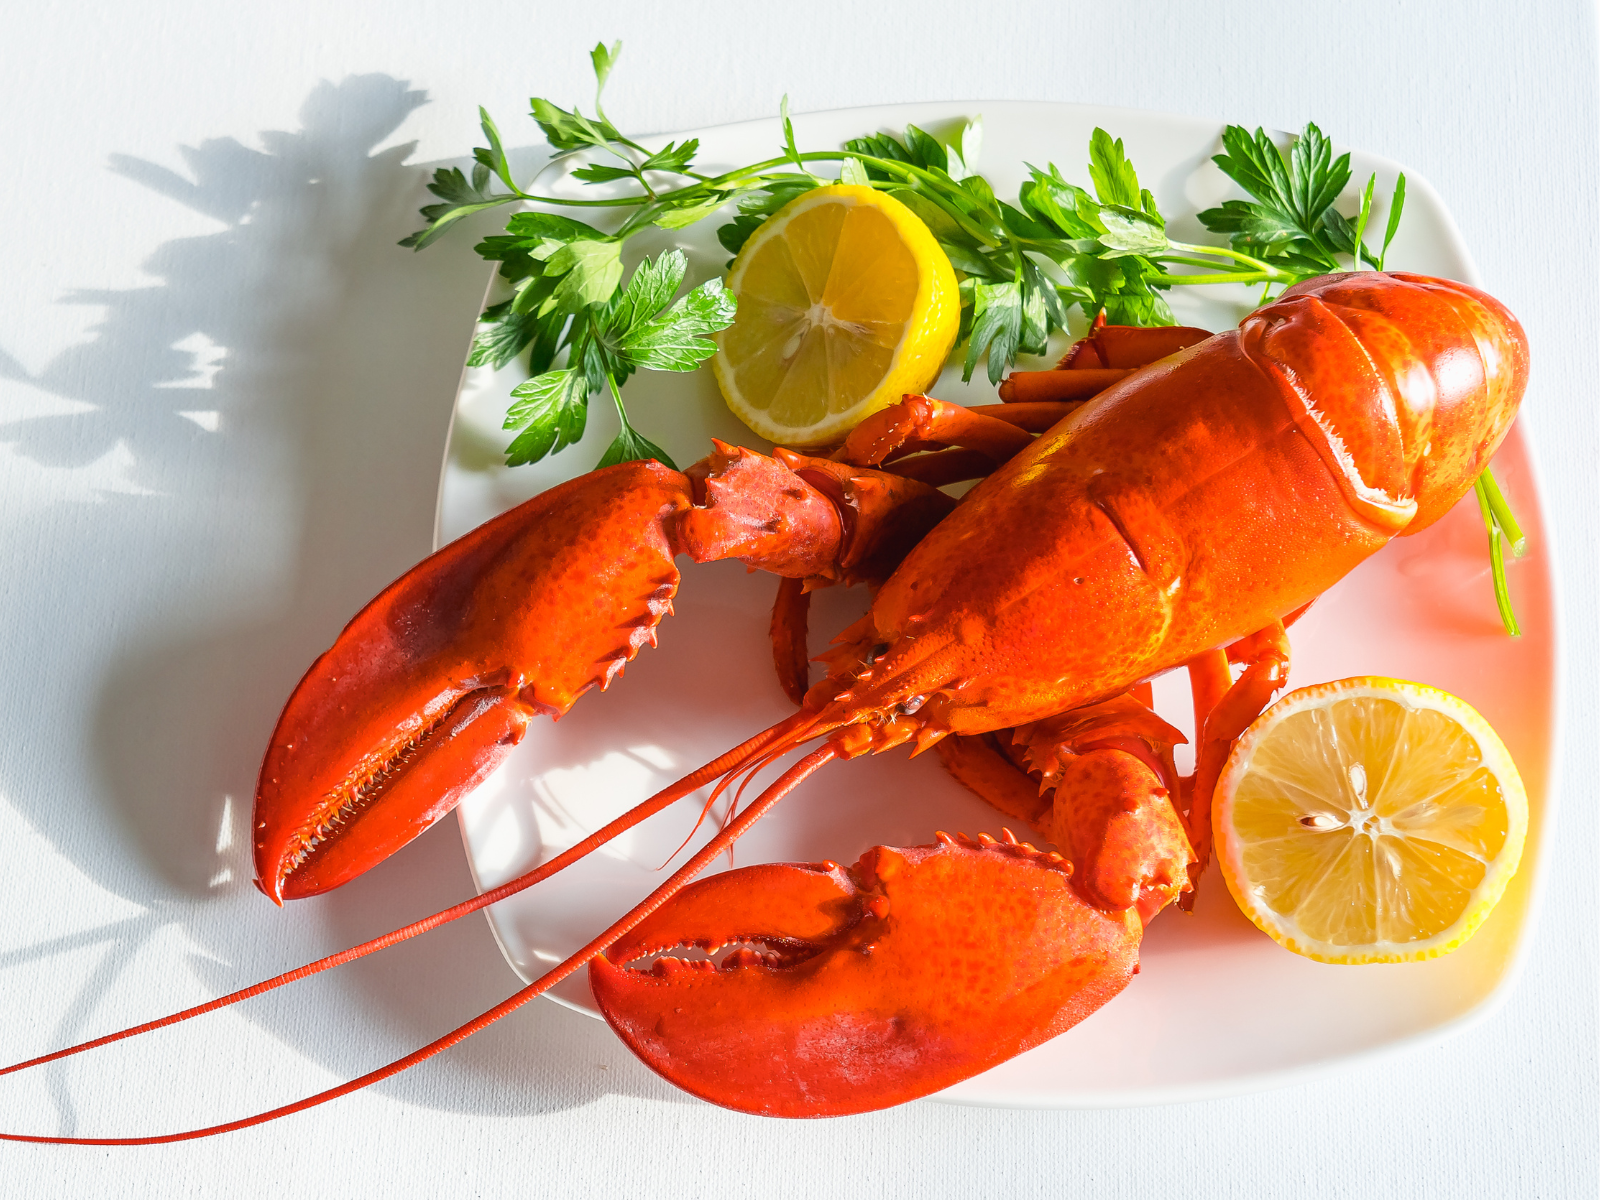 Live Maine Lobster (Size 1.2-1.4lb/Lobster)